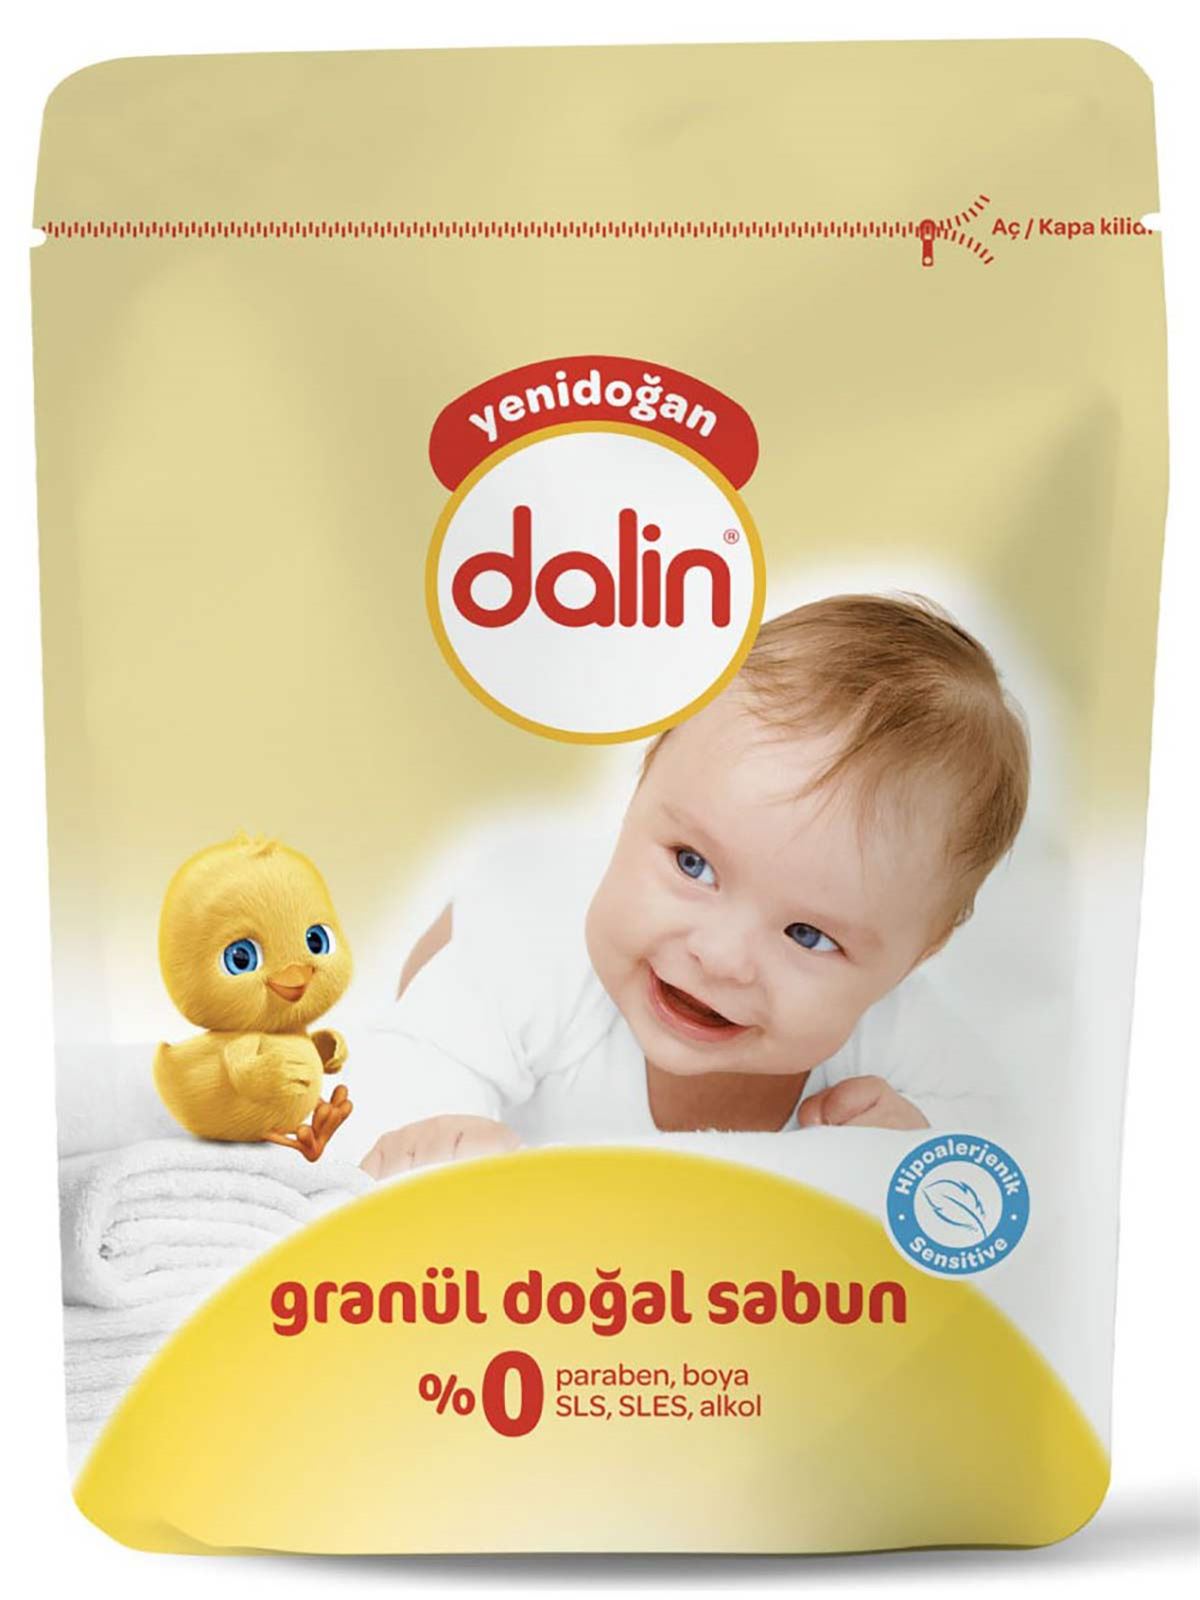 Dalin Granül Sabun 1000 gr